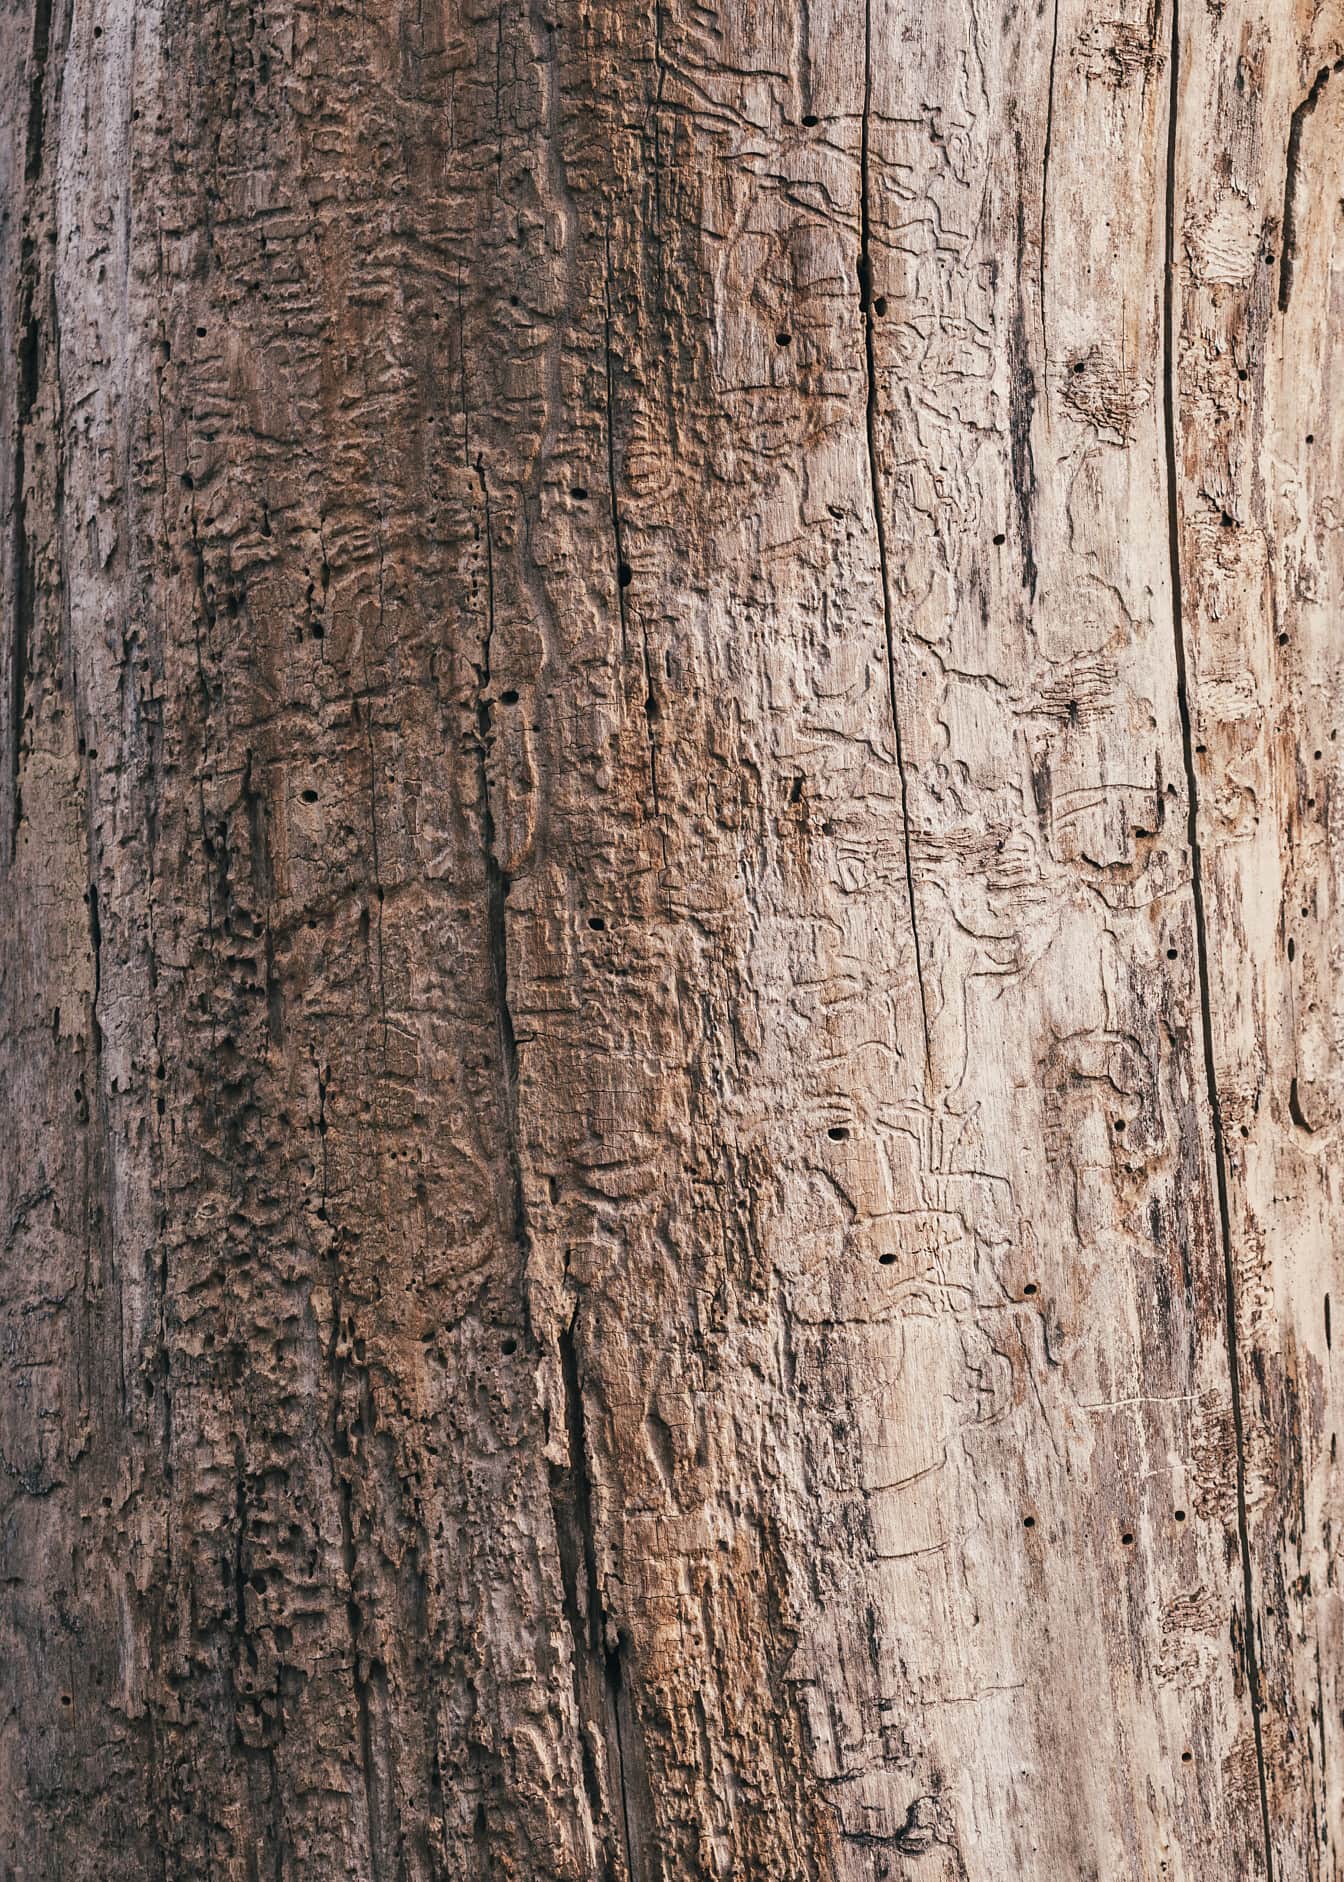 Texture en gros plan d’un tronc d’arbre brun avec un motif sec rugueux